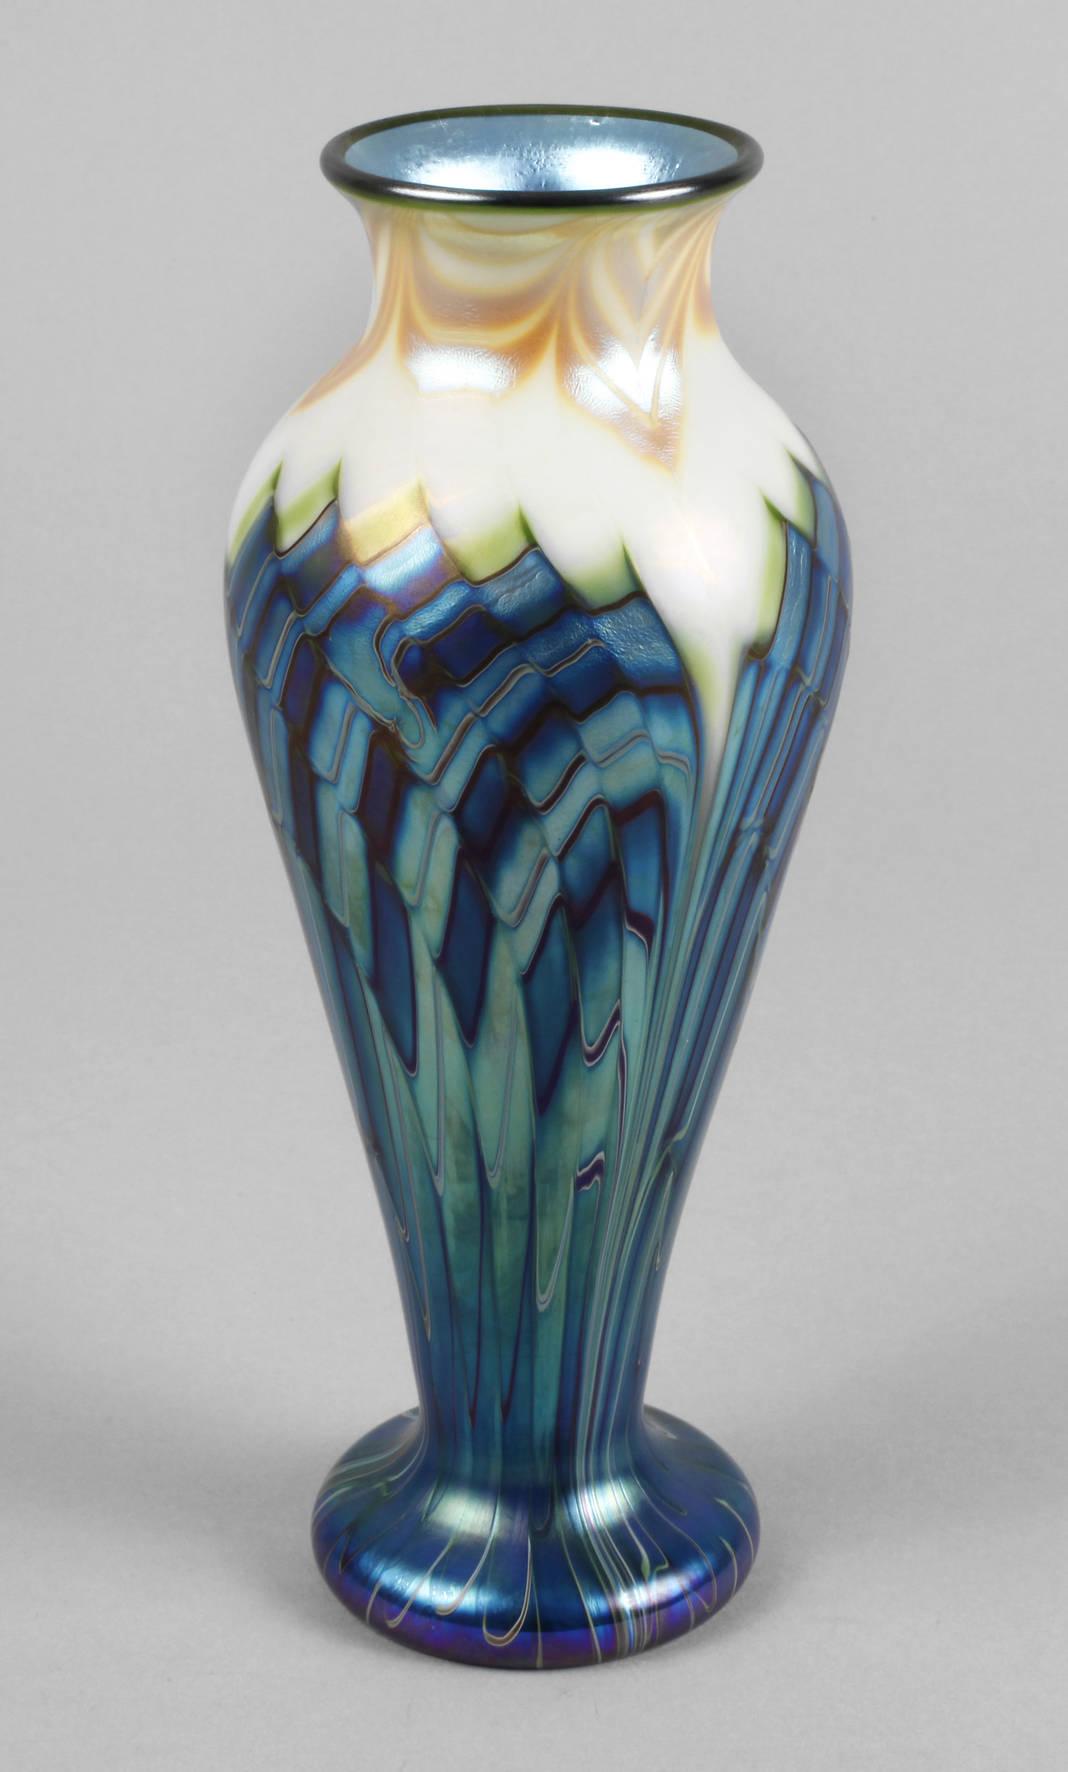 Vase Orient & Flume